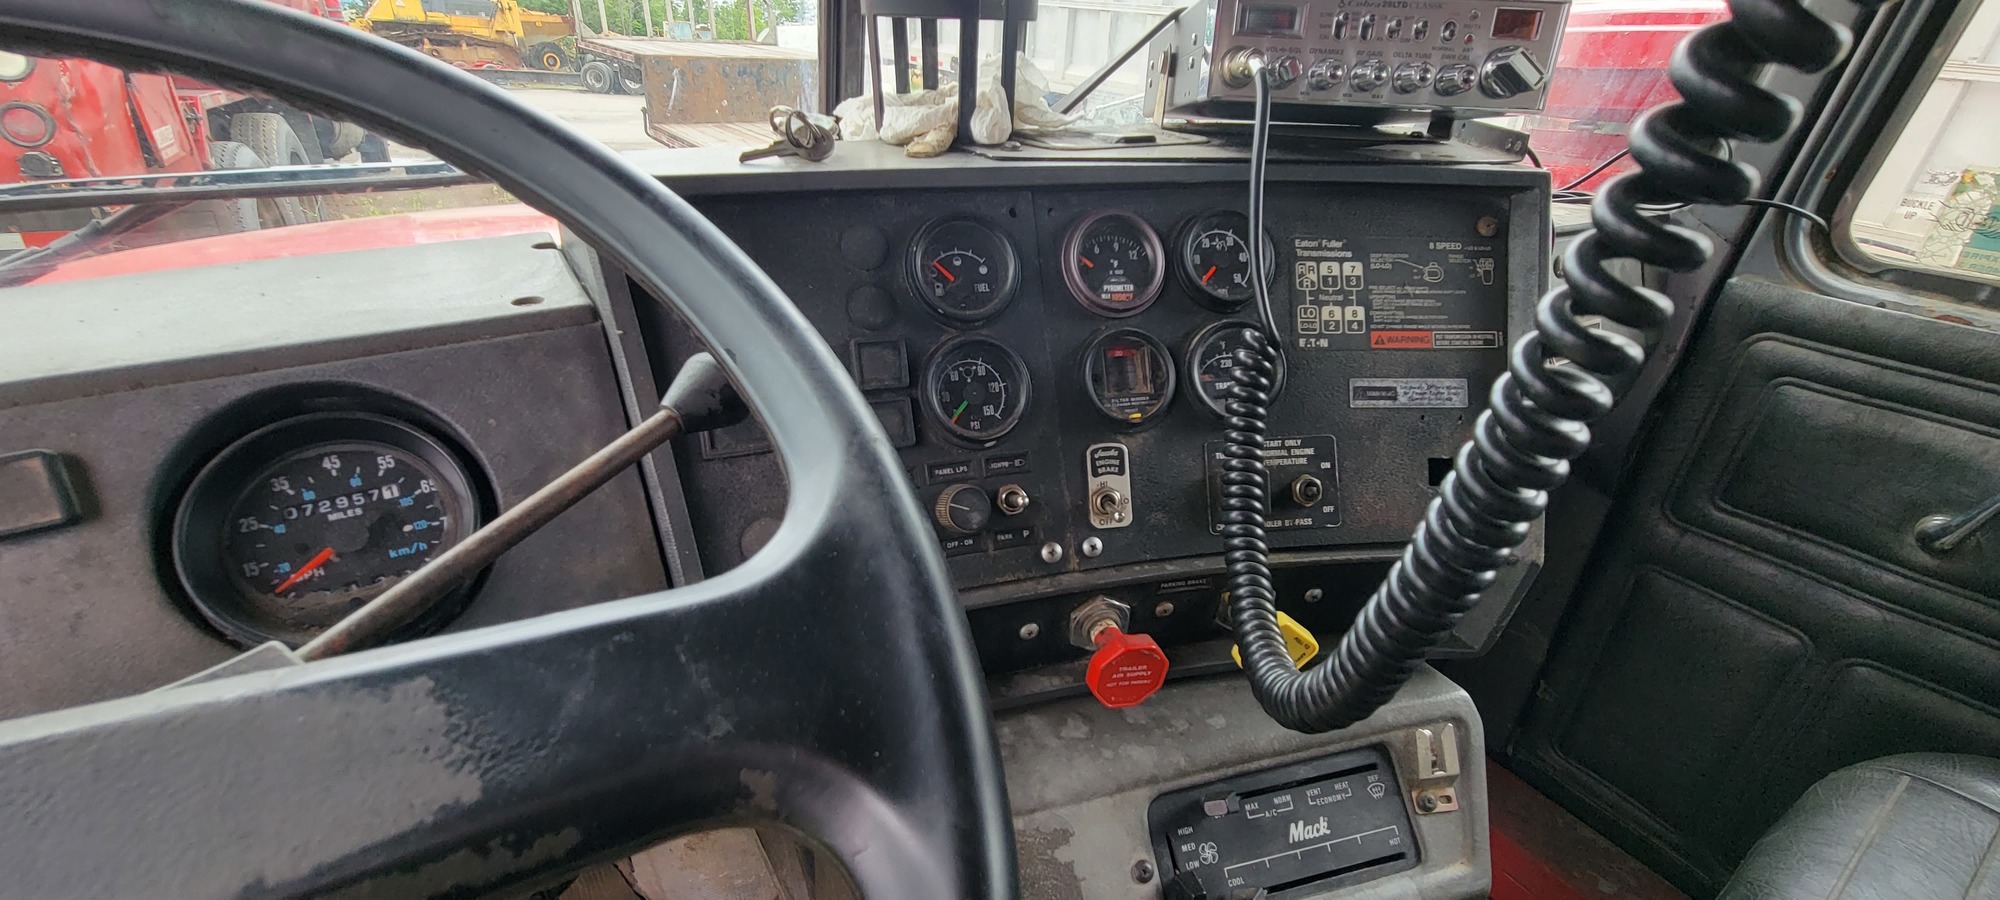 1994 MACK RD688S Dump Trucks | Iron Listing